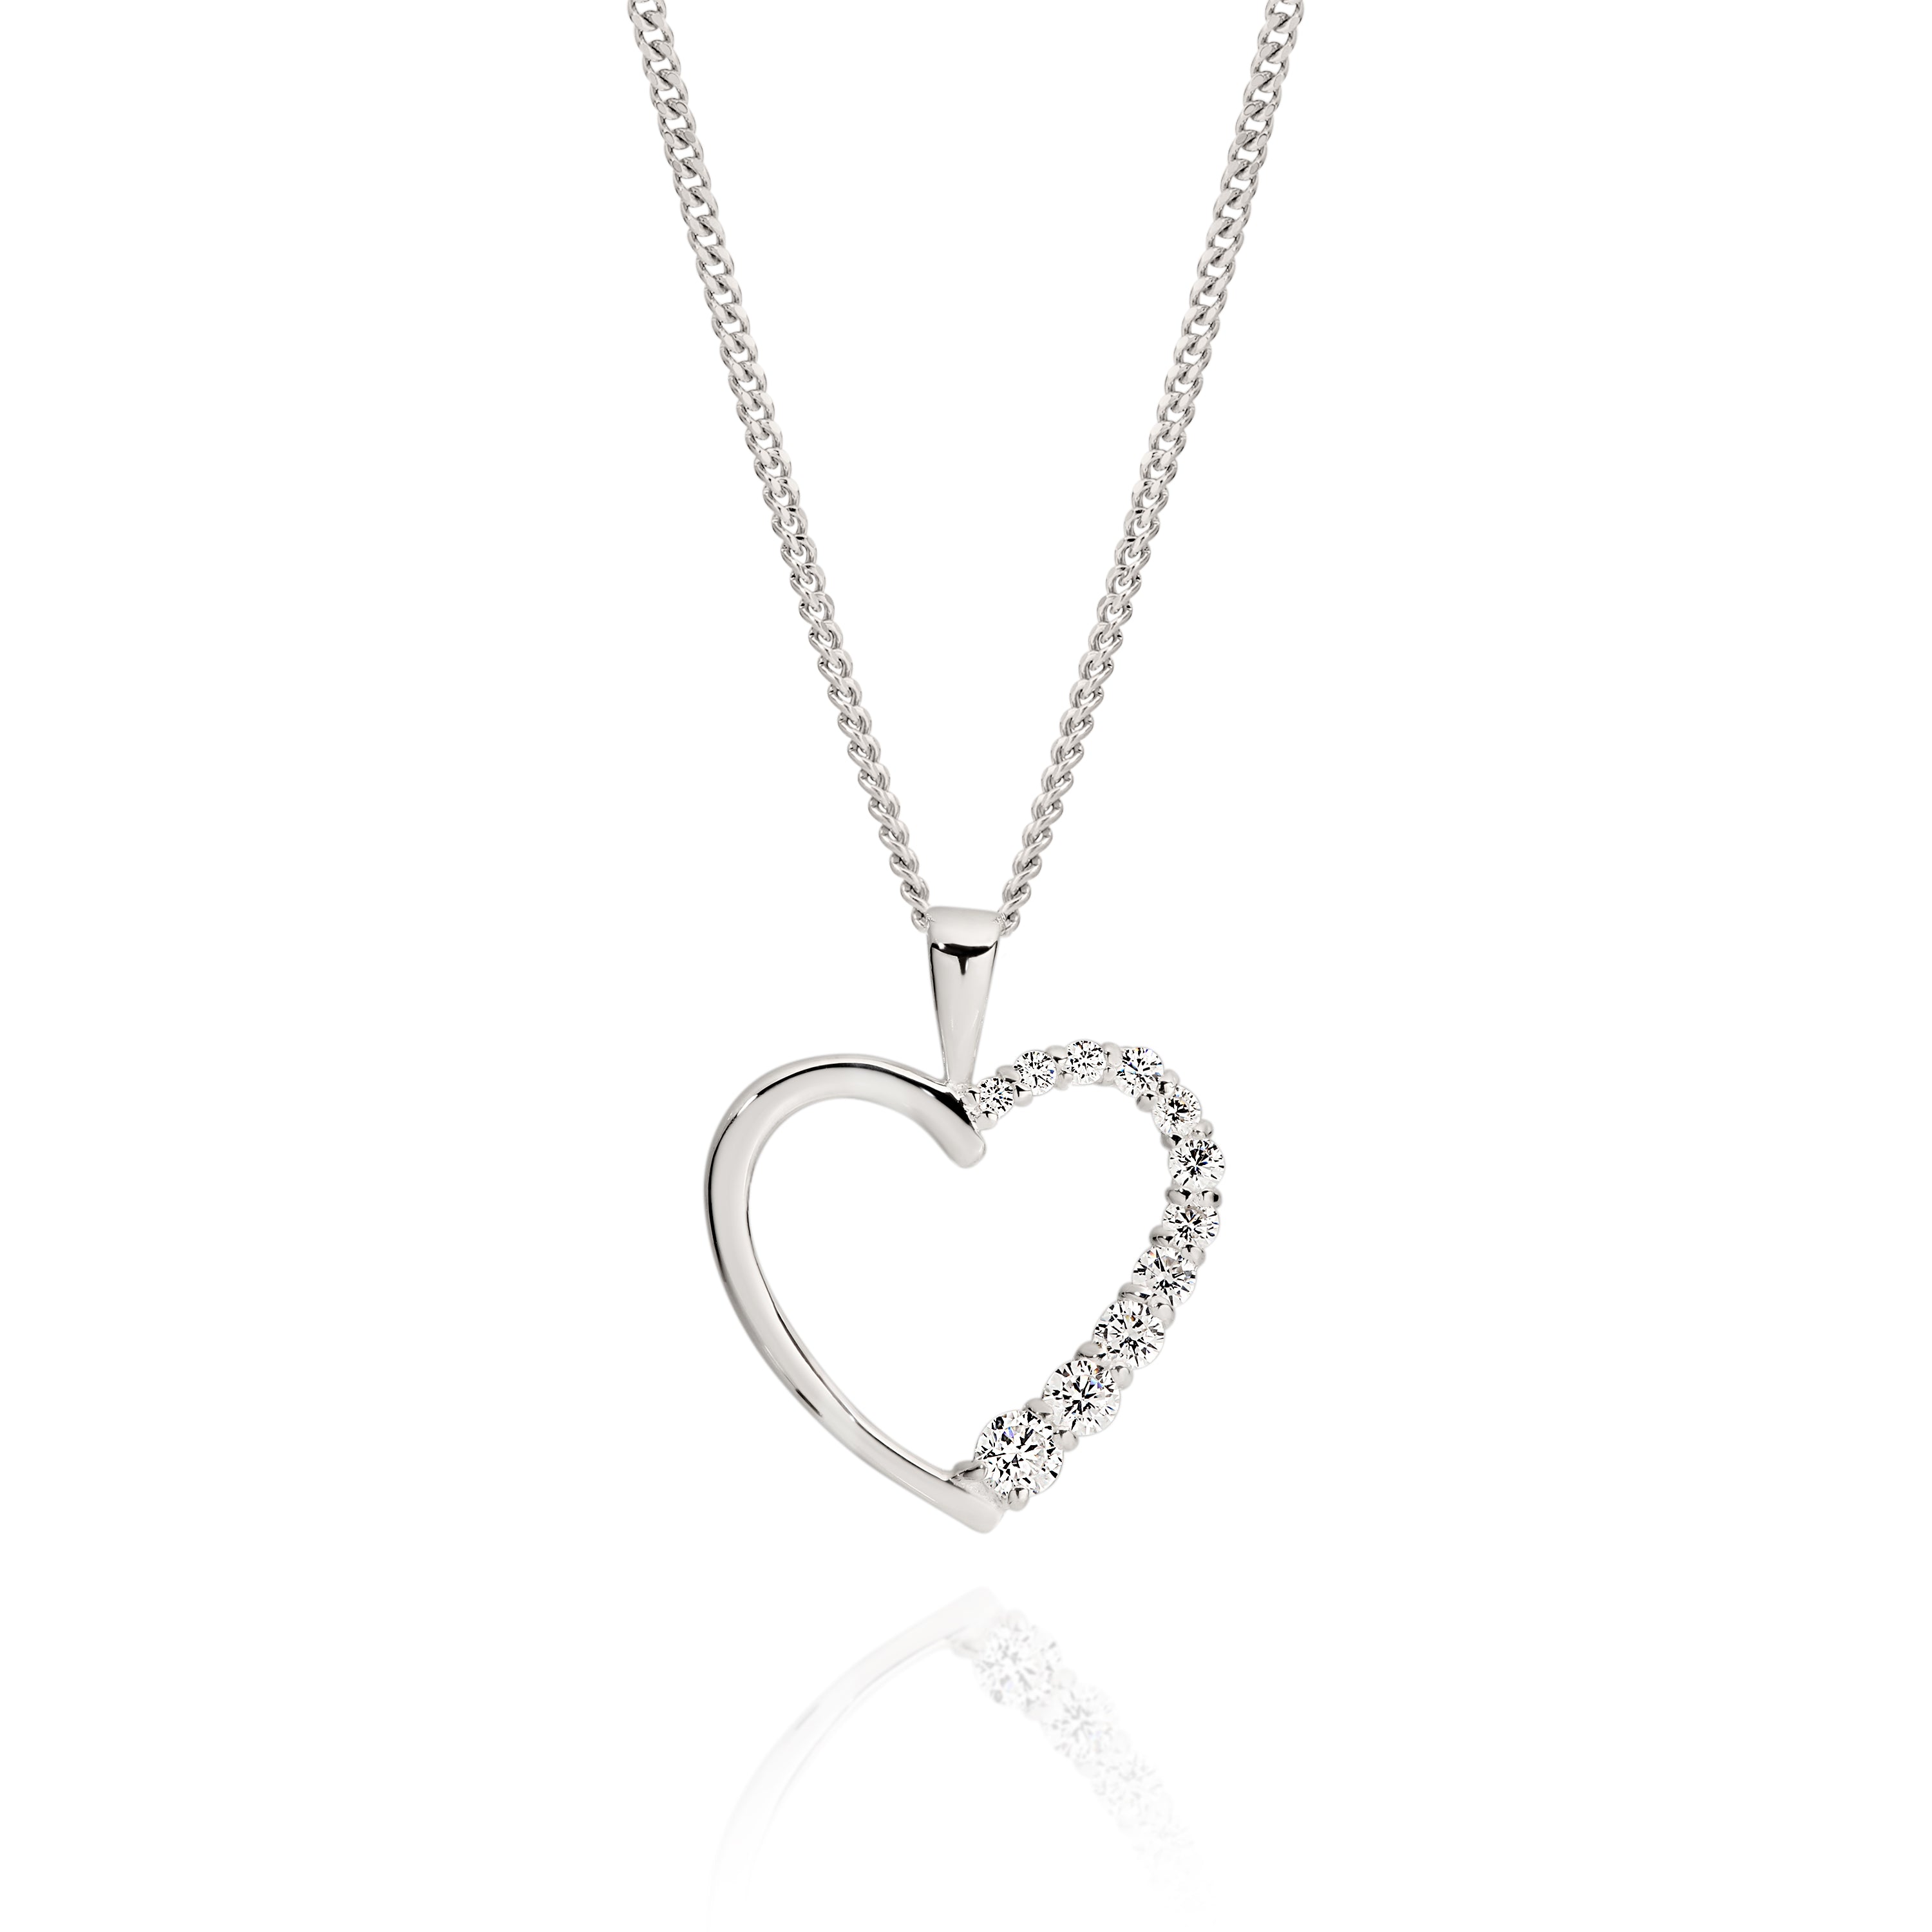 Silver cubic zirconia heart pendant